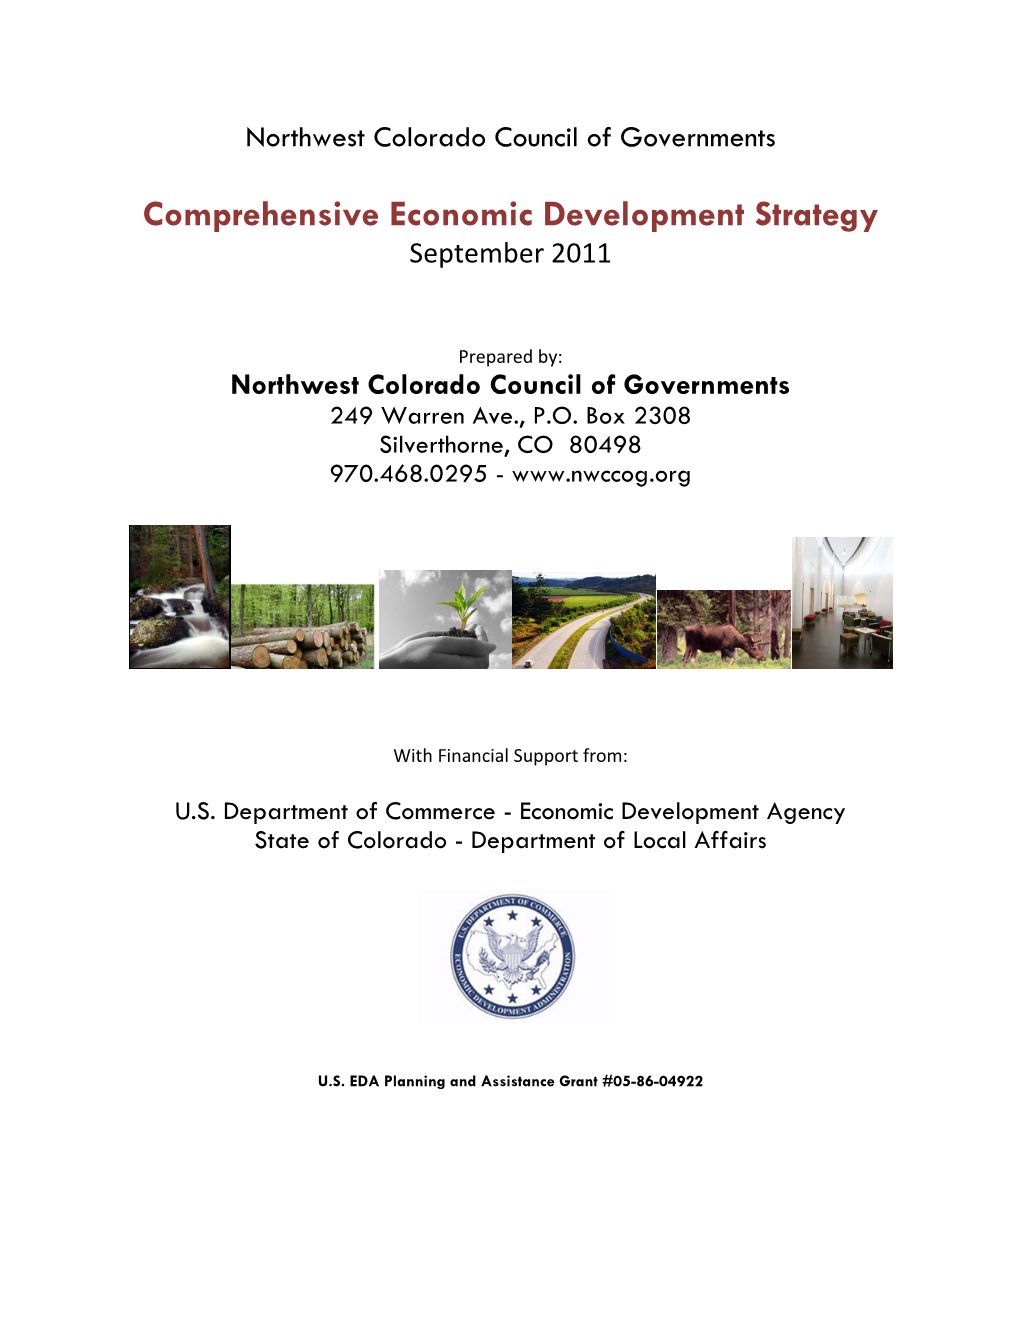 Comprehensive Economic Development Strategy September 2011